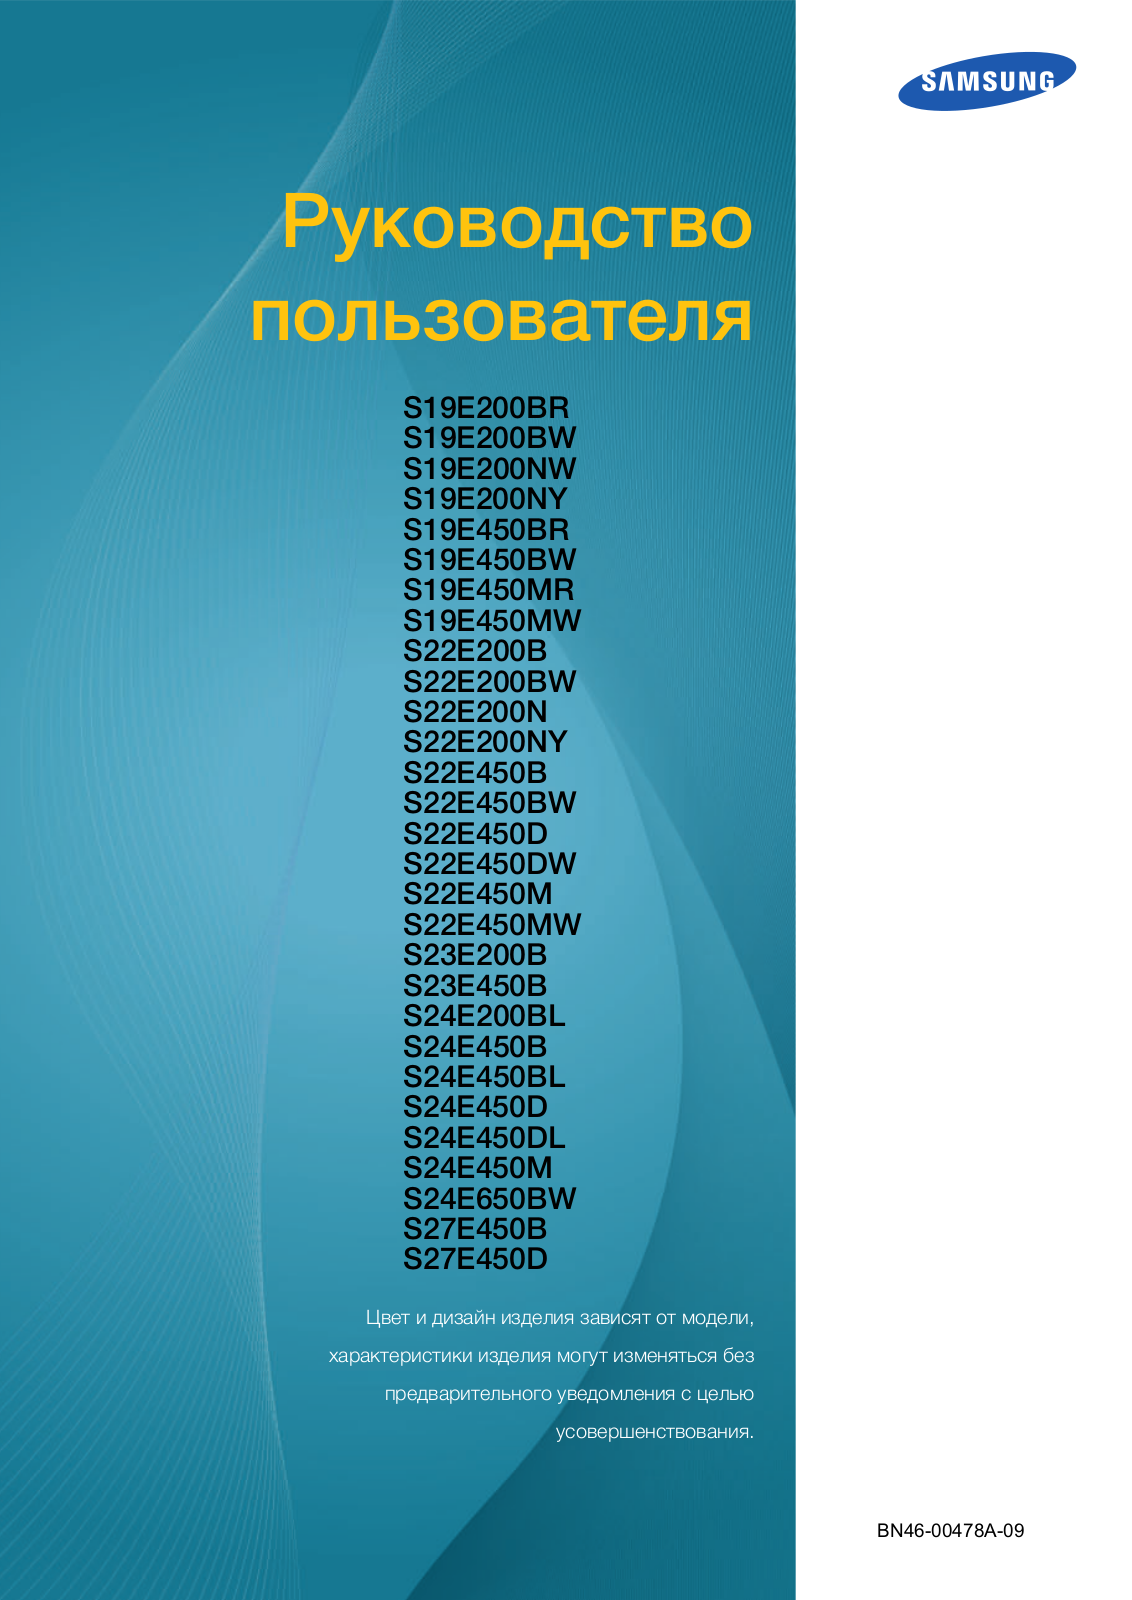 Samsung S22E450B User Manual